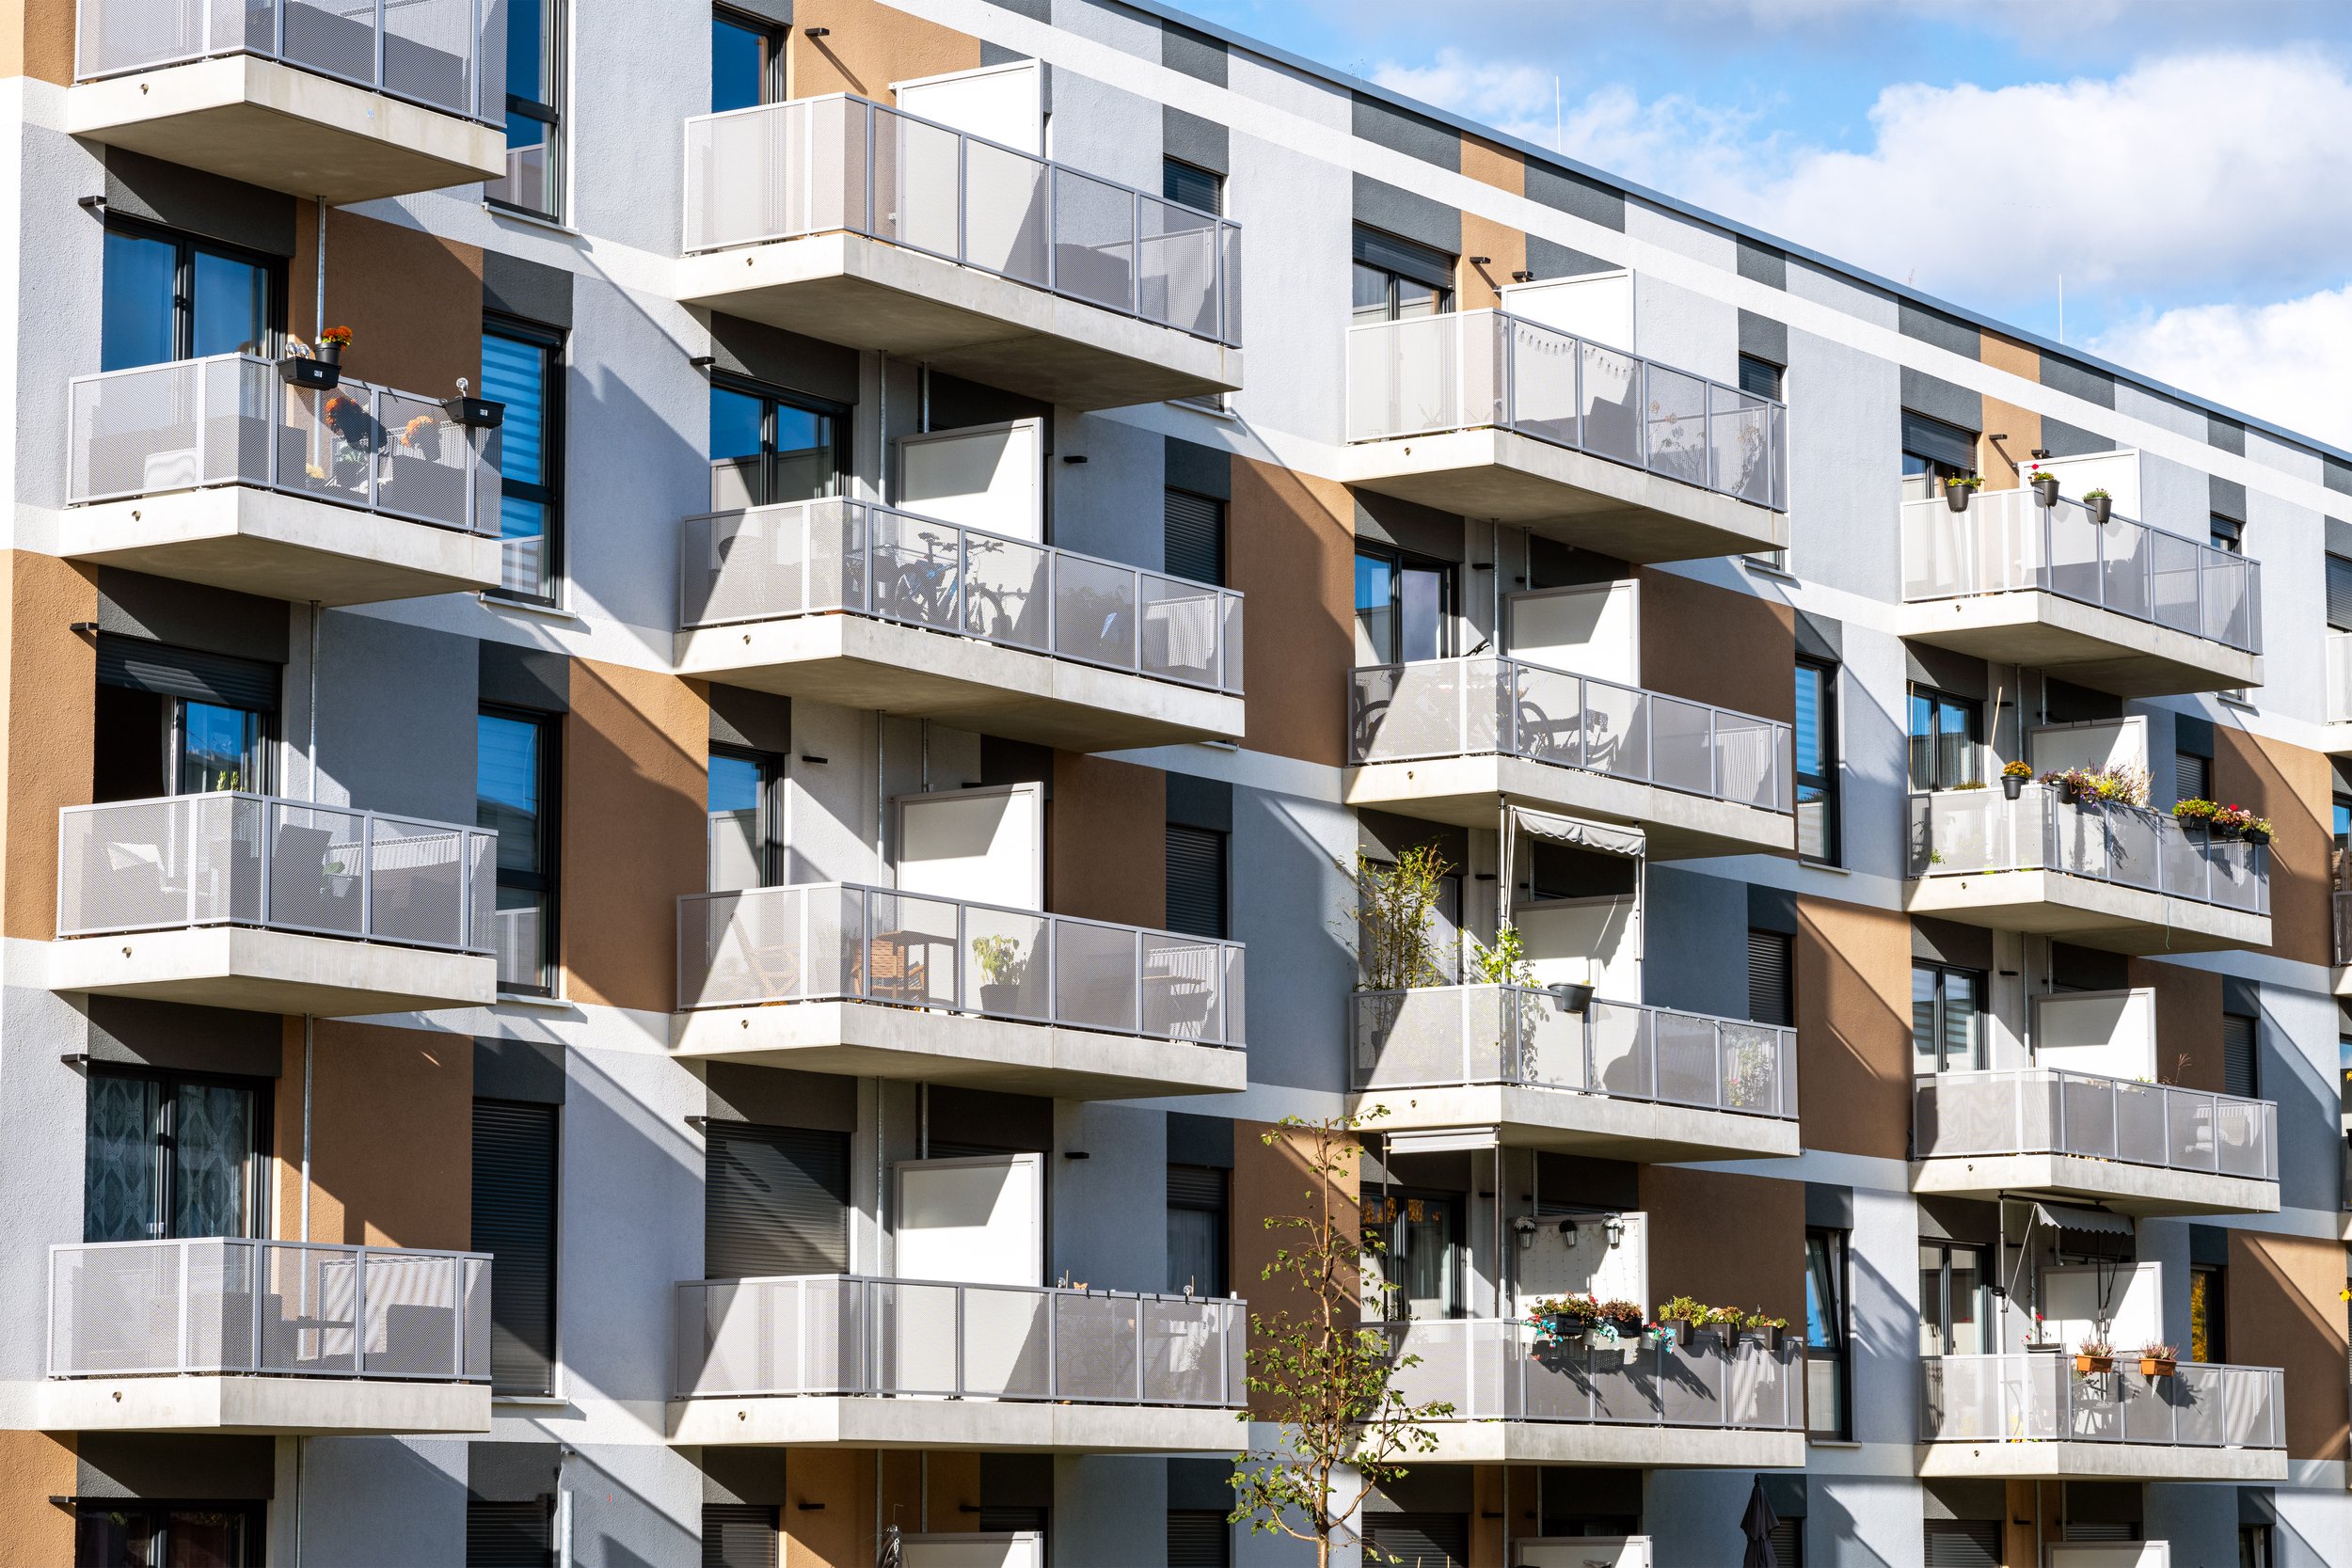 apartment-building-with-balconies-2022-12-10-01-12-02-utc.jpg